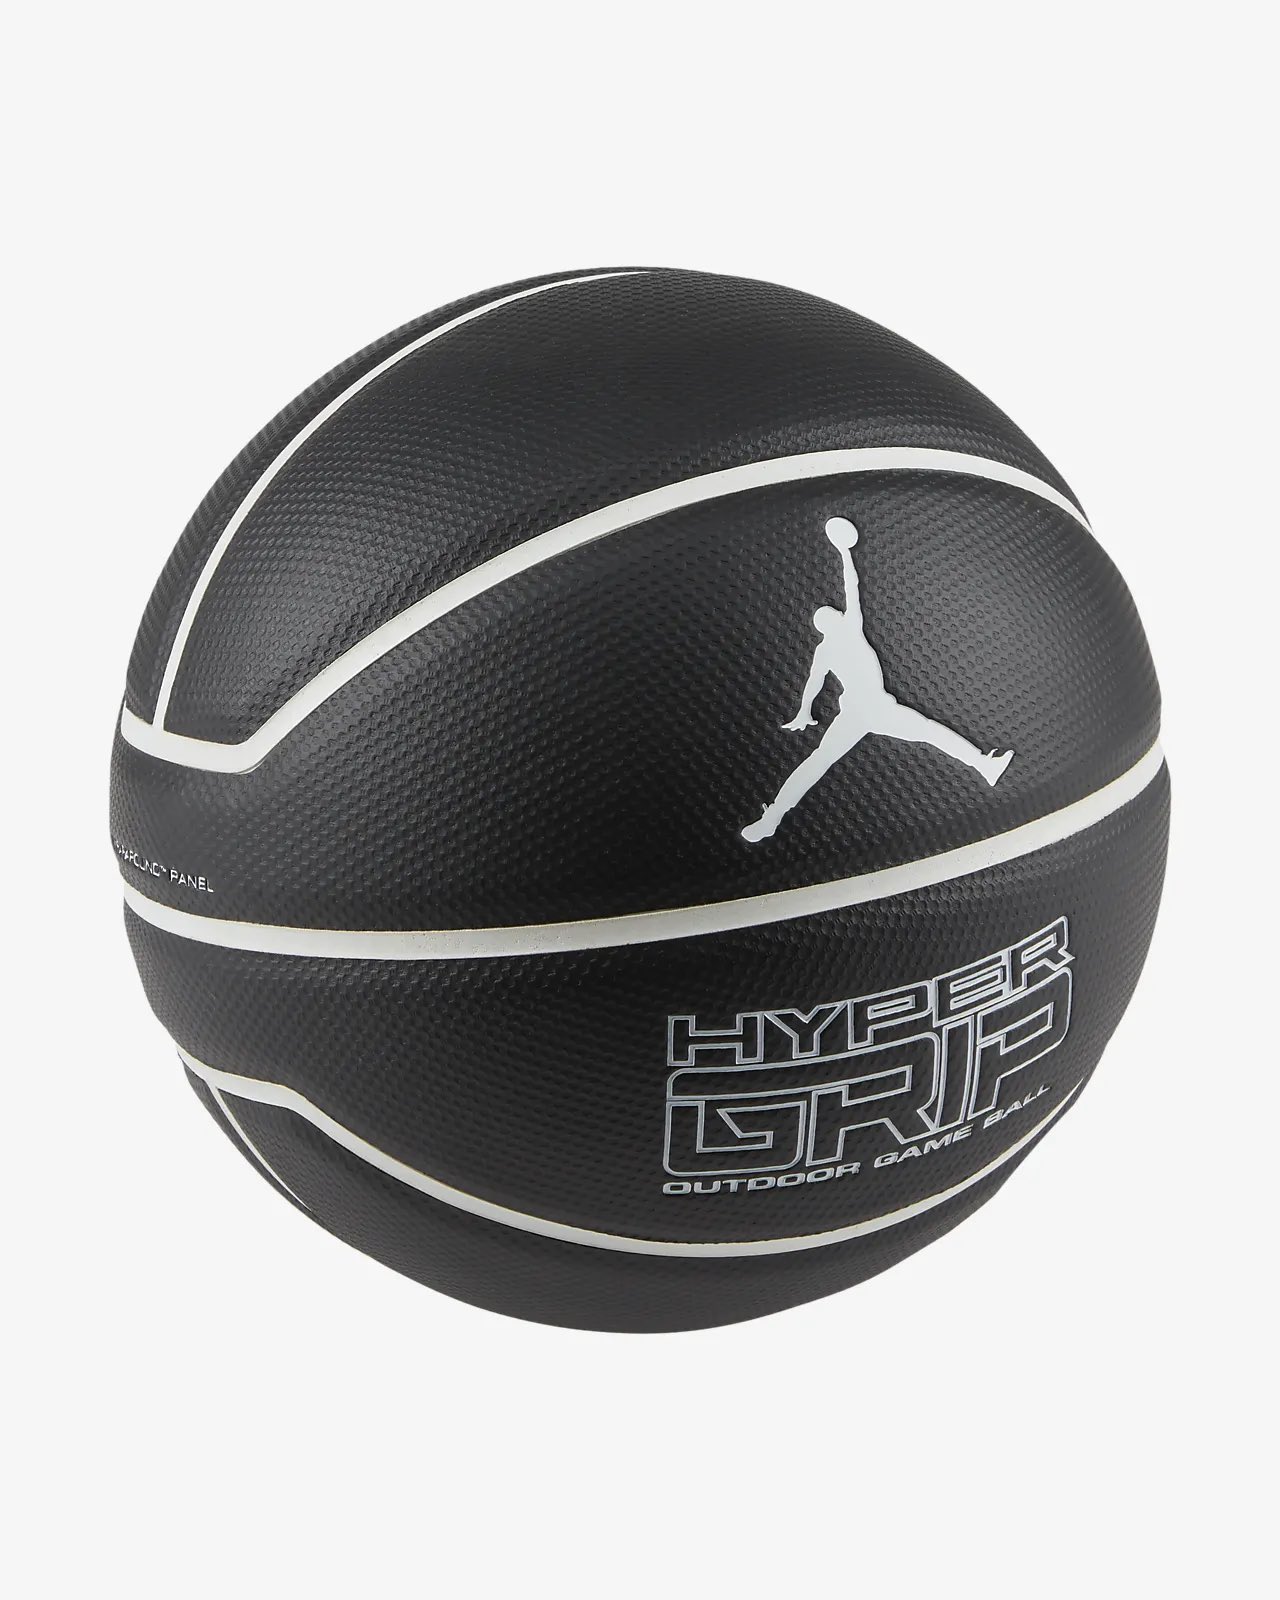 Integral micro Cantina SNKR_TWITR on Twitter: "Jordan Hyper Grip 4P Basketball Size 7 on Nike US  Shop -&gt; https://t.co/R8eW1biYUb #AD https://t.co/5FB6KKFb31" / Twitter